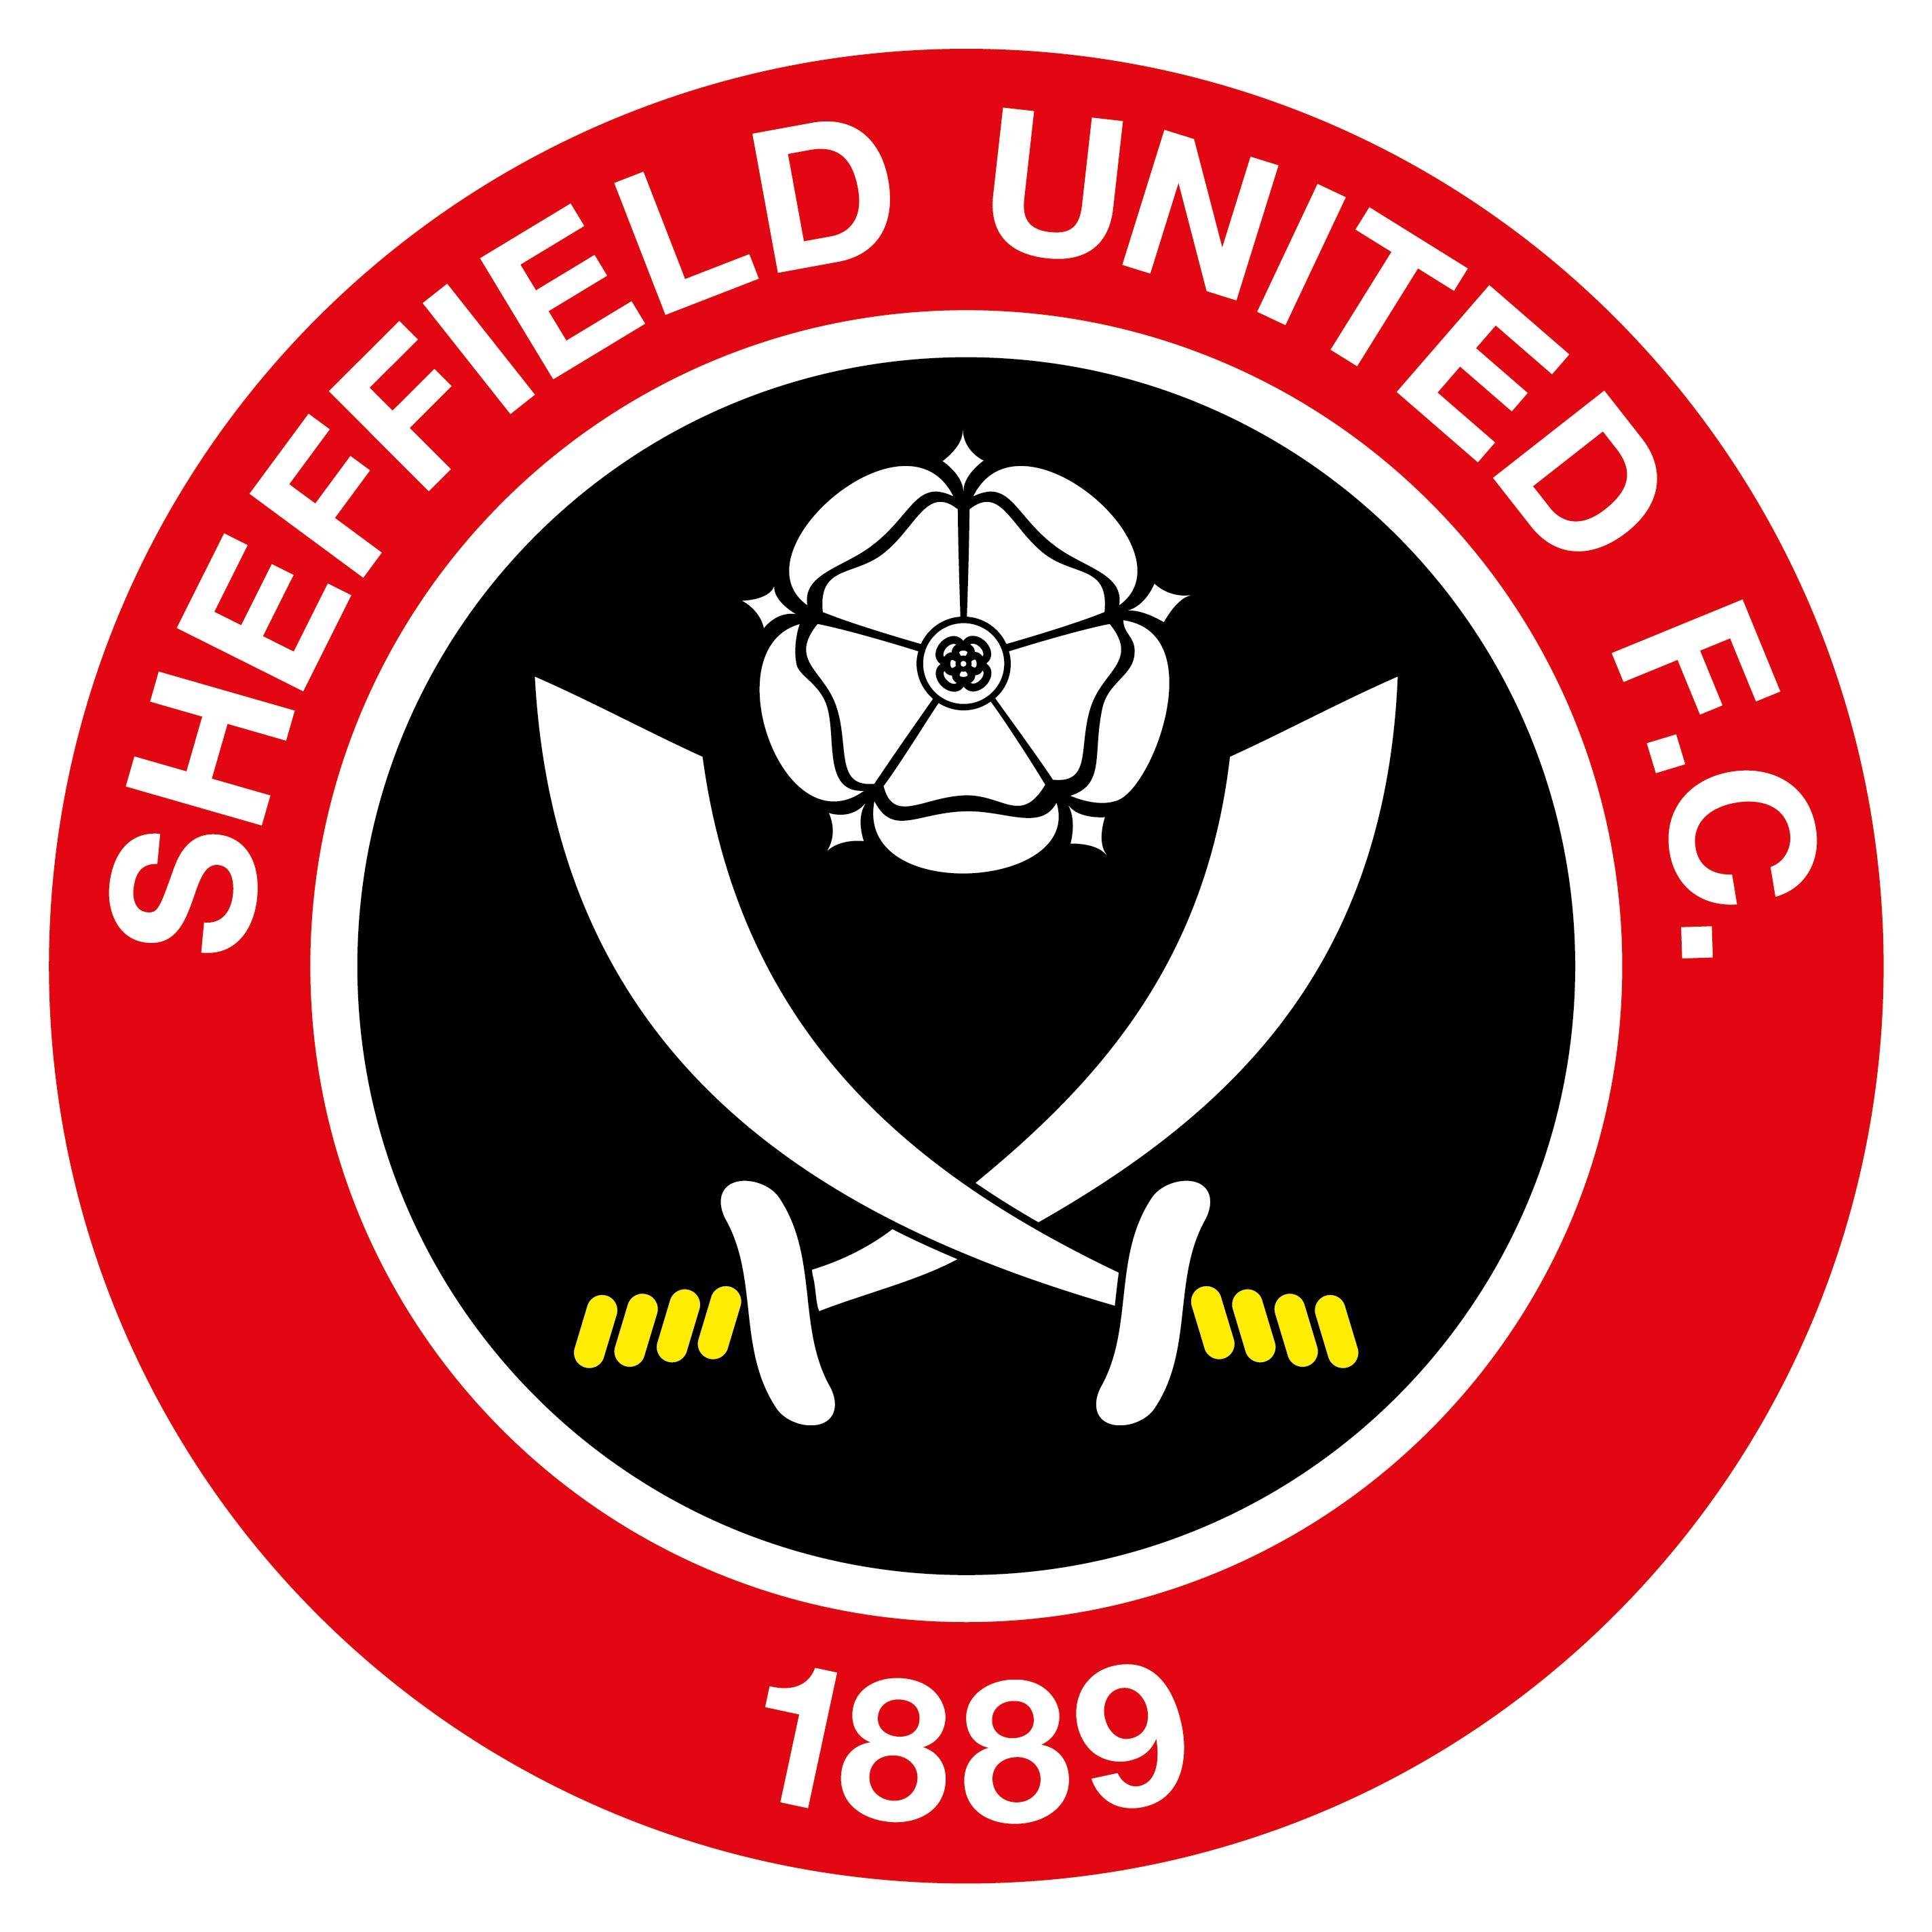 Cuenta oficial del Sheffield United. Otras cuentas oficiales : @SheffieldUnited | @SUFCArabic | @SUFCTurk | @SUFC_Women |